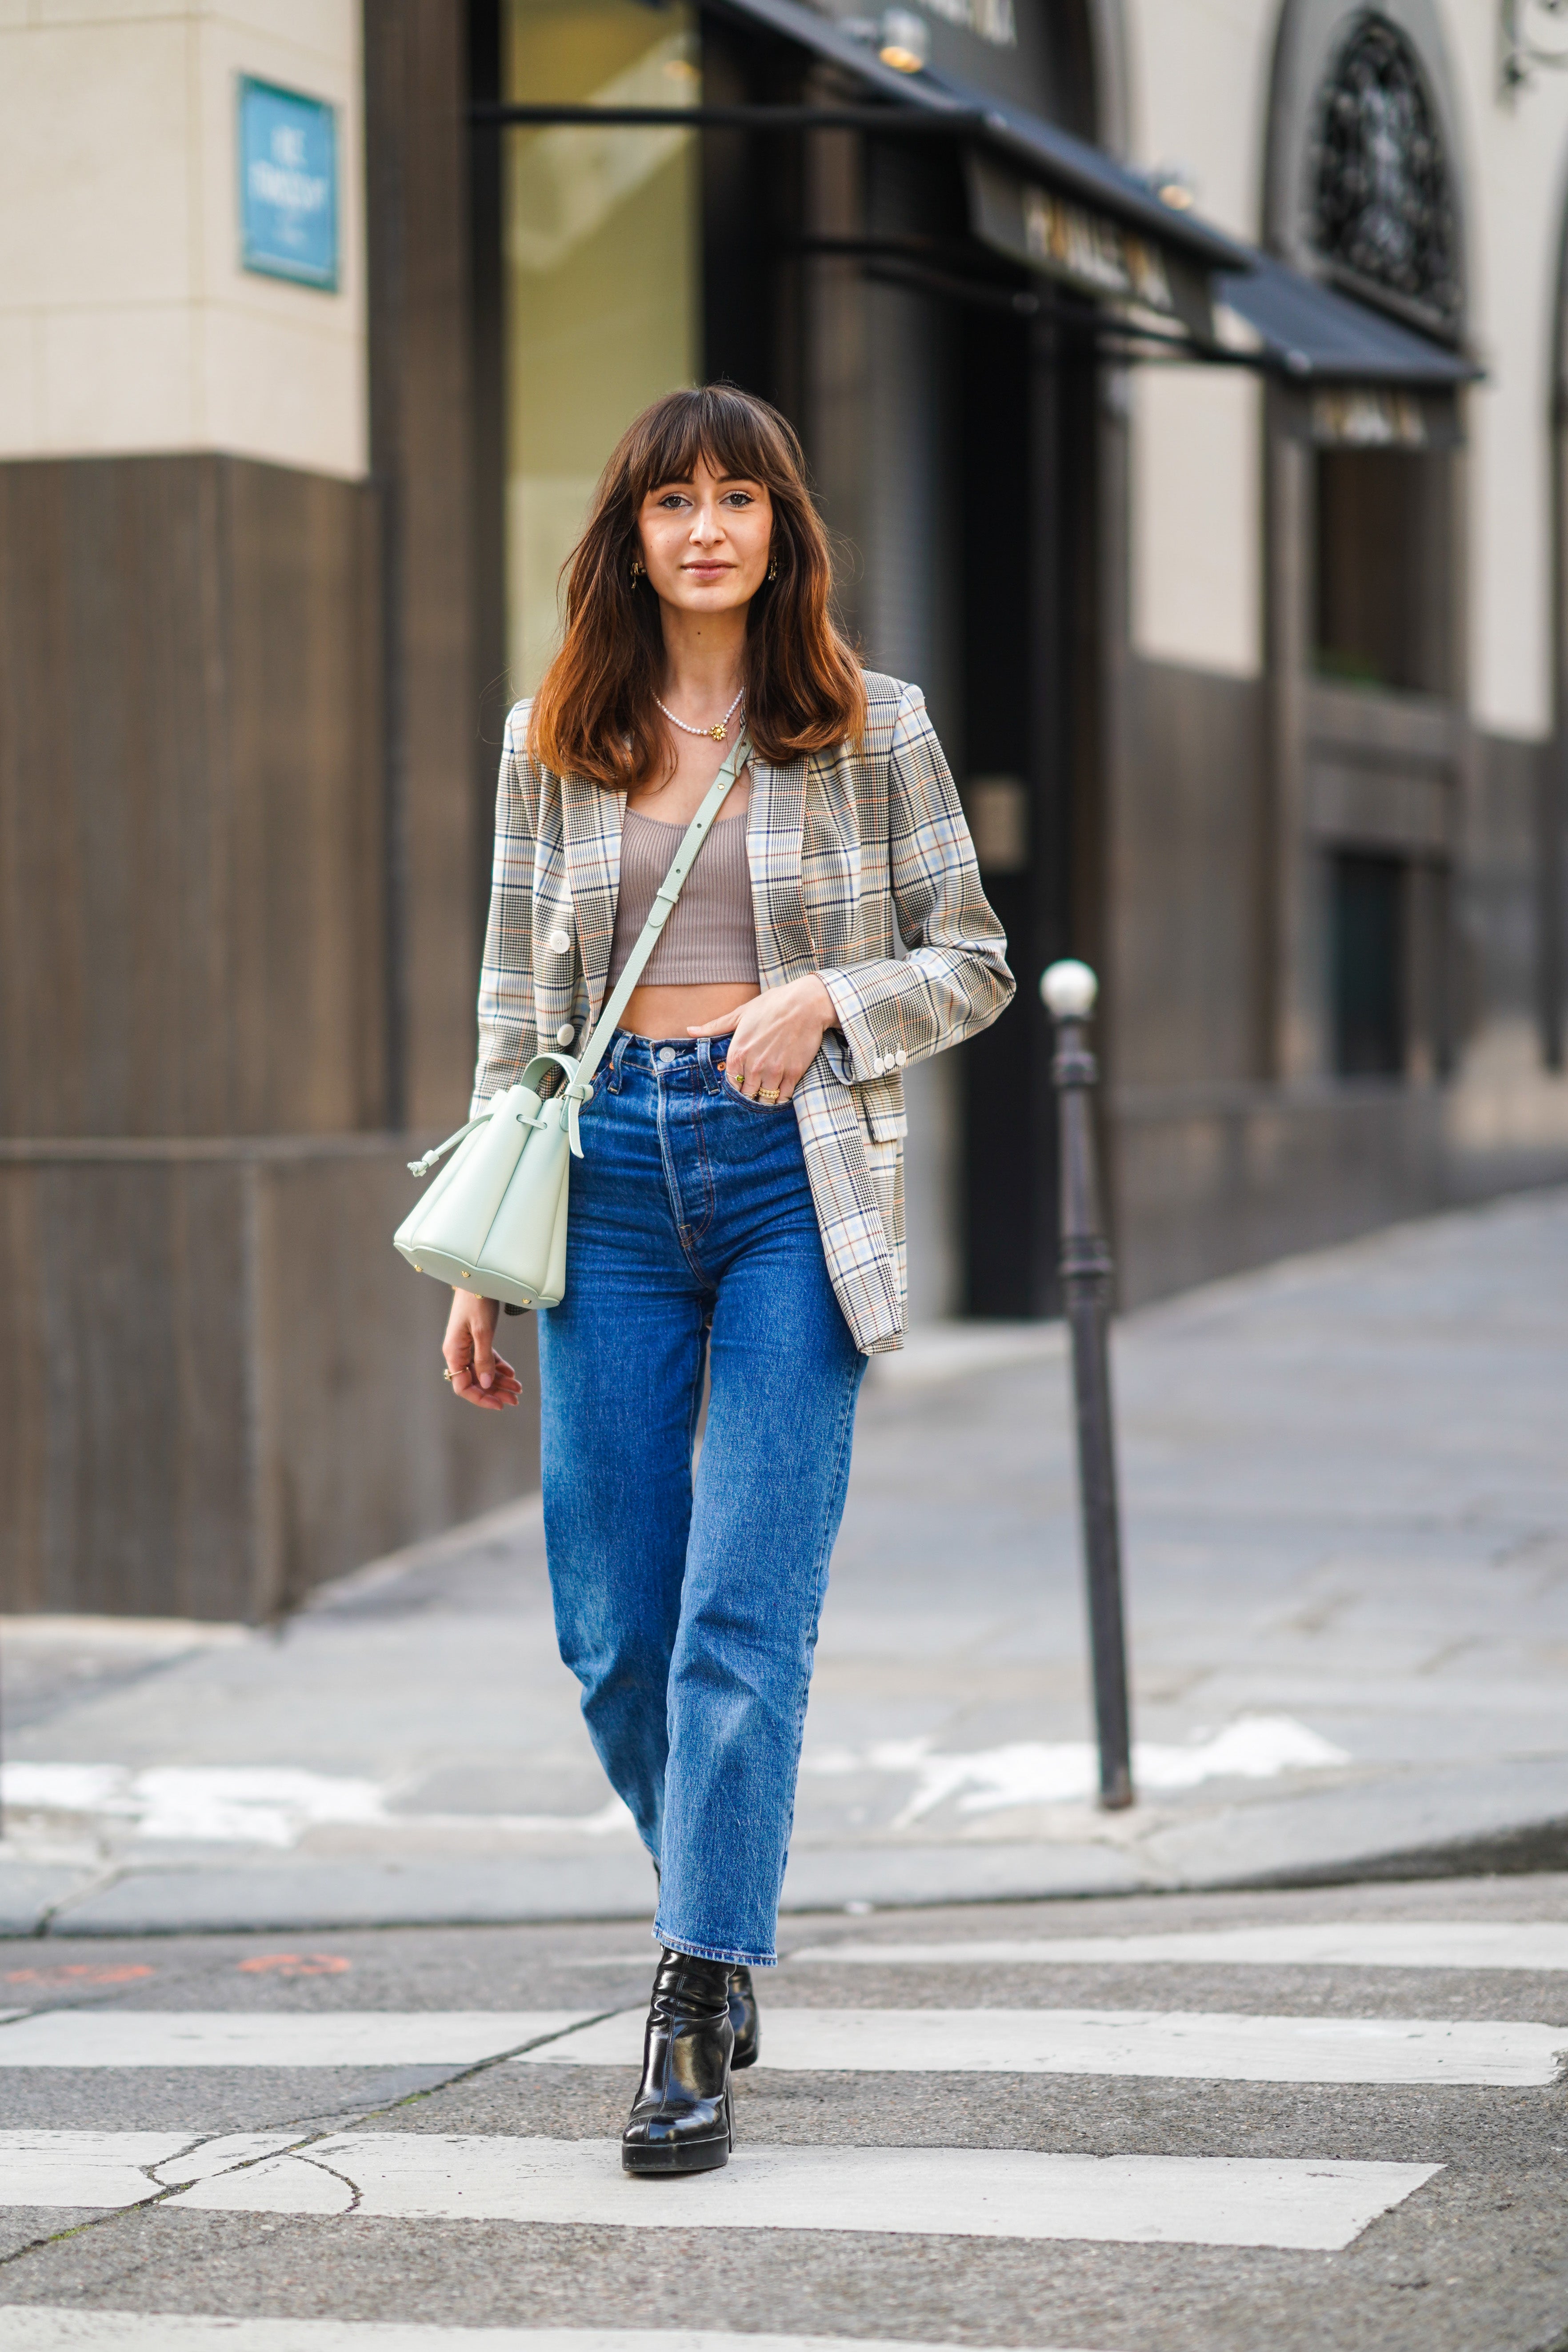 Jane Austen hale Sømand Paris Street Style Fall 2021 Was All About Baggy Jeans